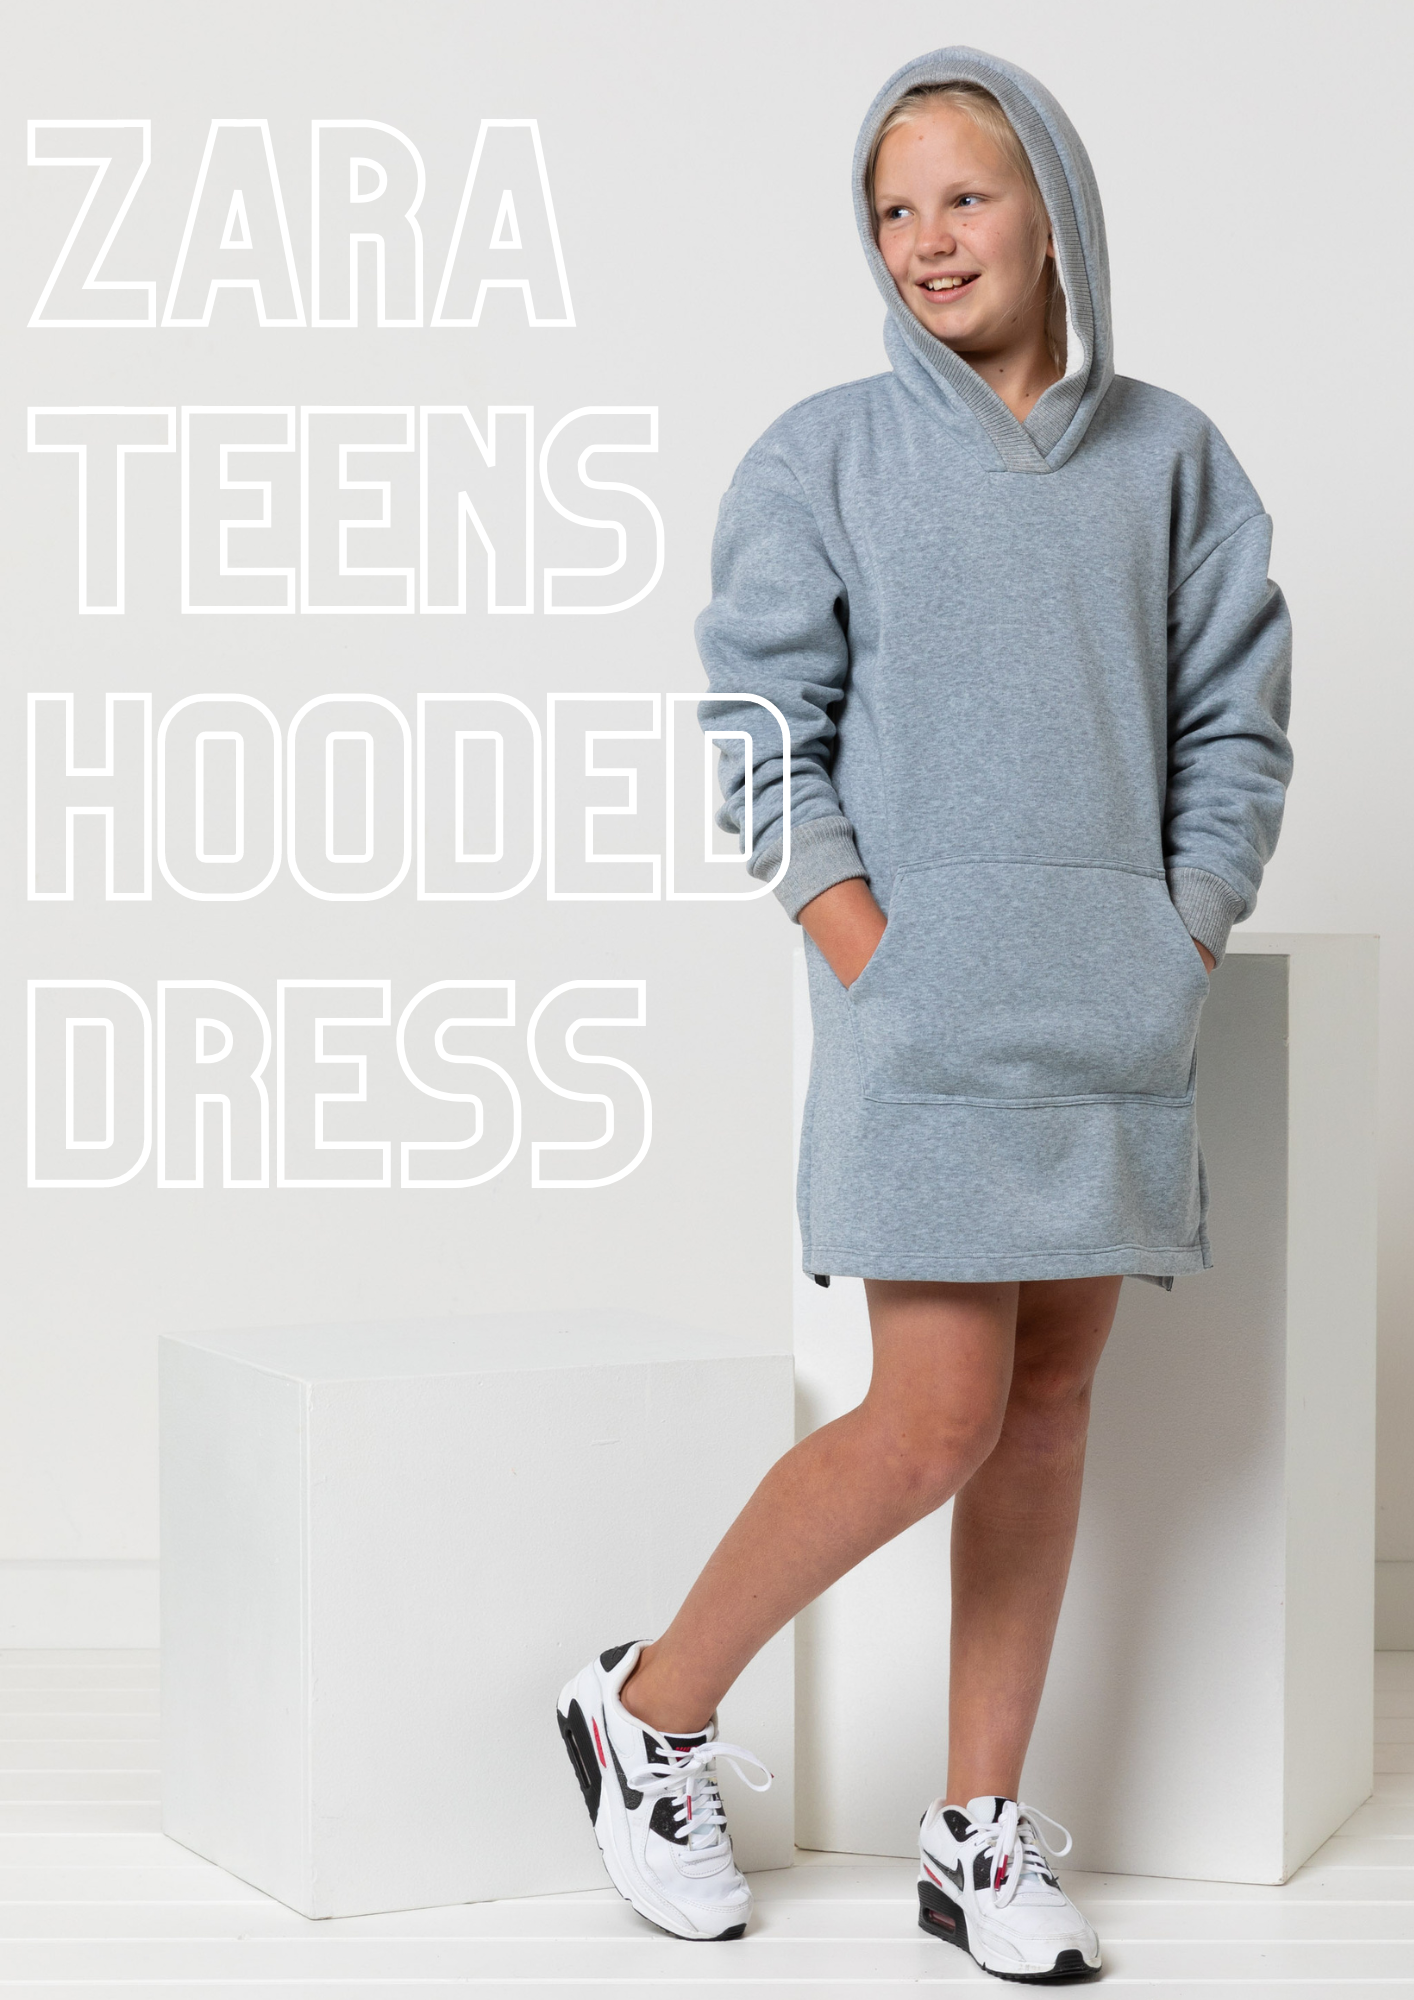 Style Arc Teen's December Bonus pattern is here! - Delta Teens Hooded Dress 08-16 